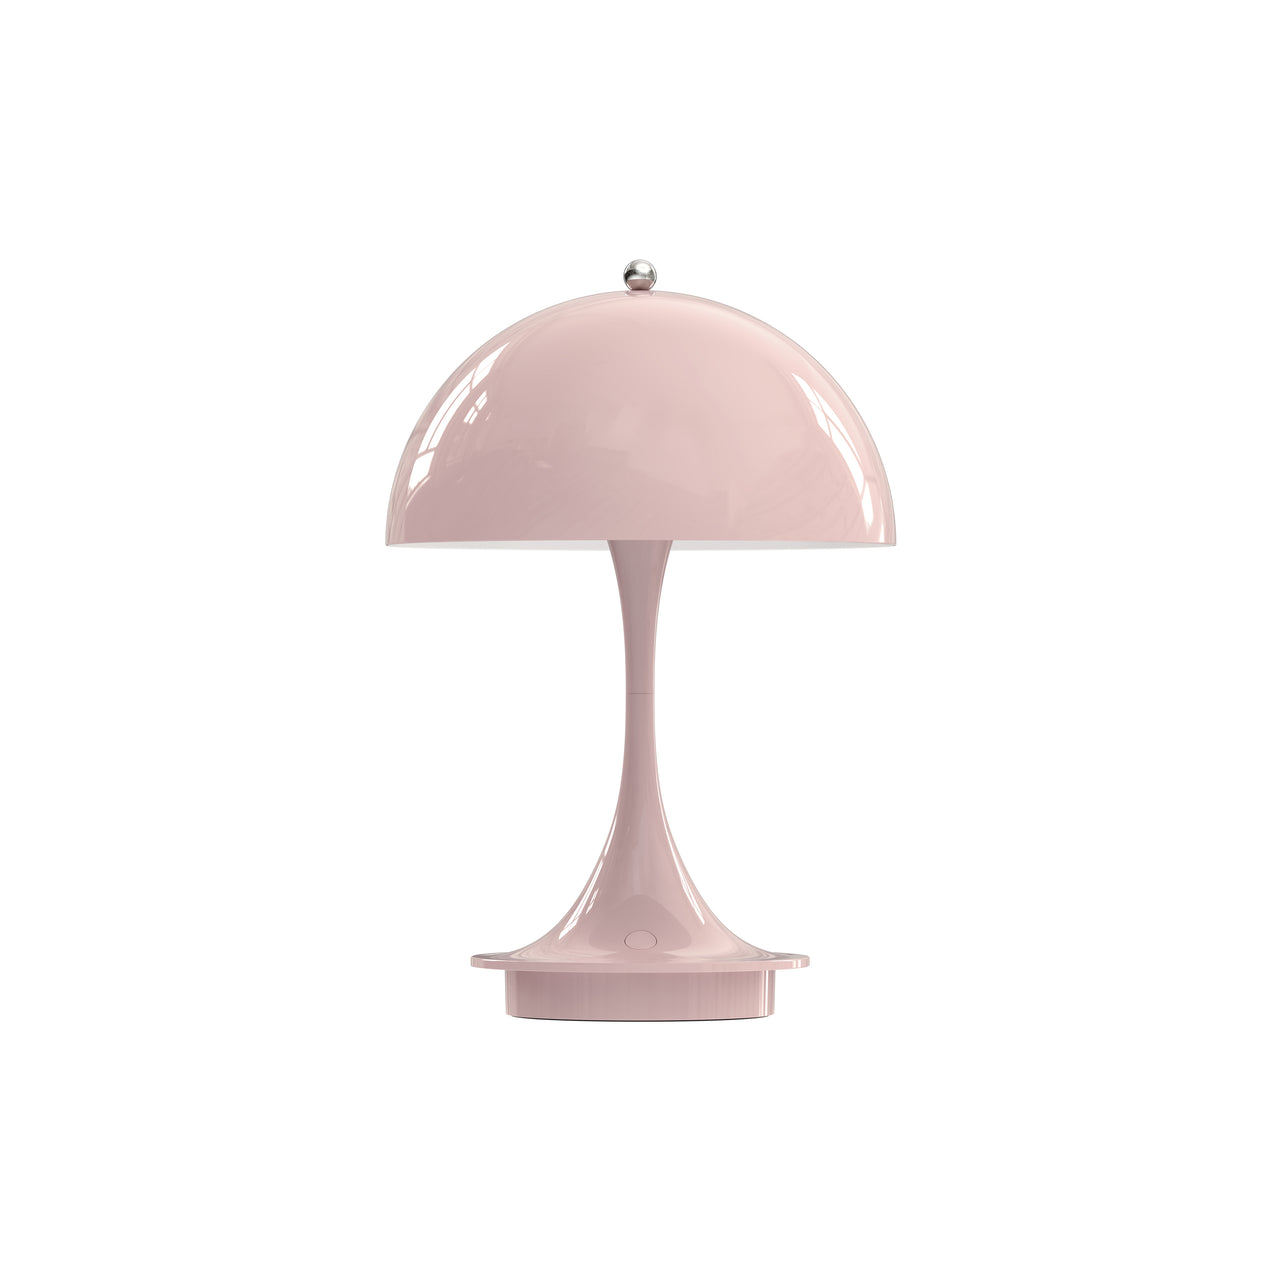 Panthella Portable Table Lamp | Buy Louis Poulsen online at A+R